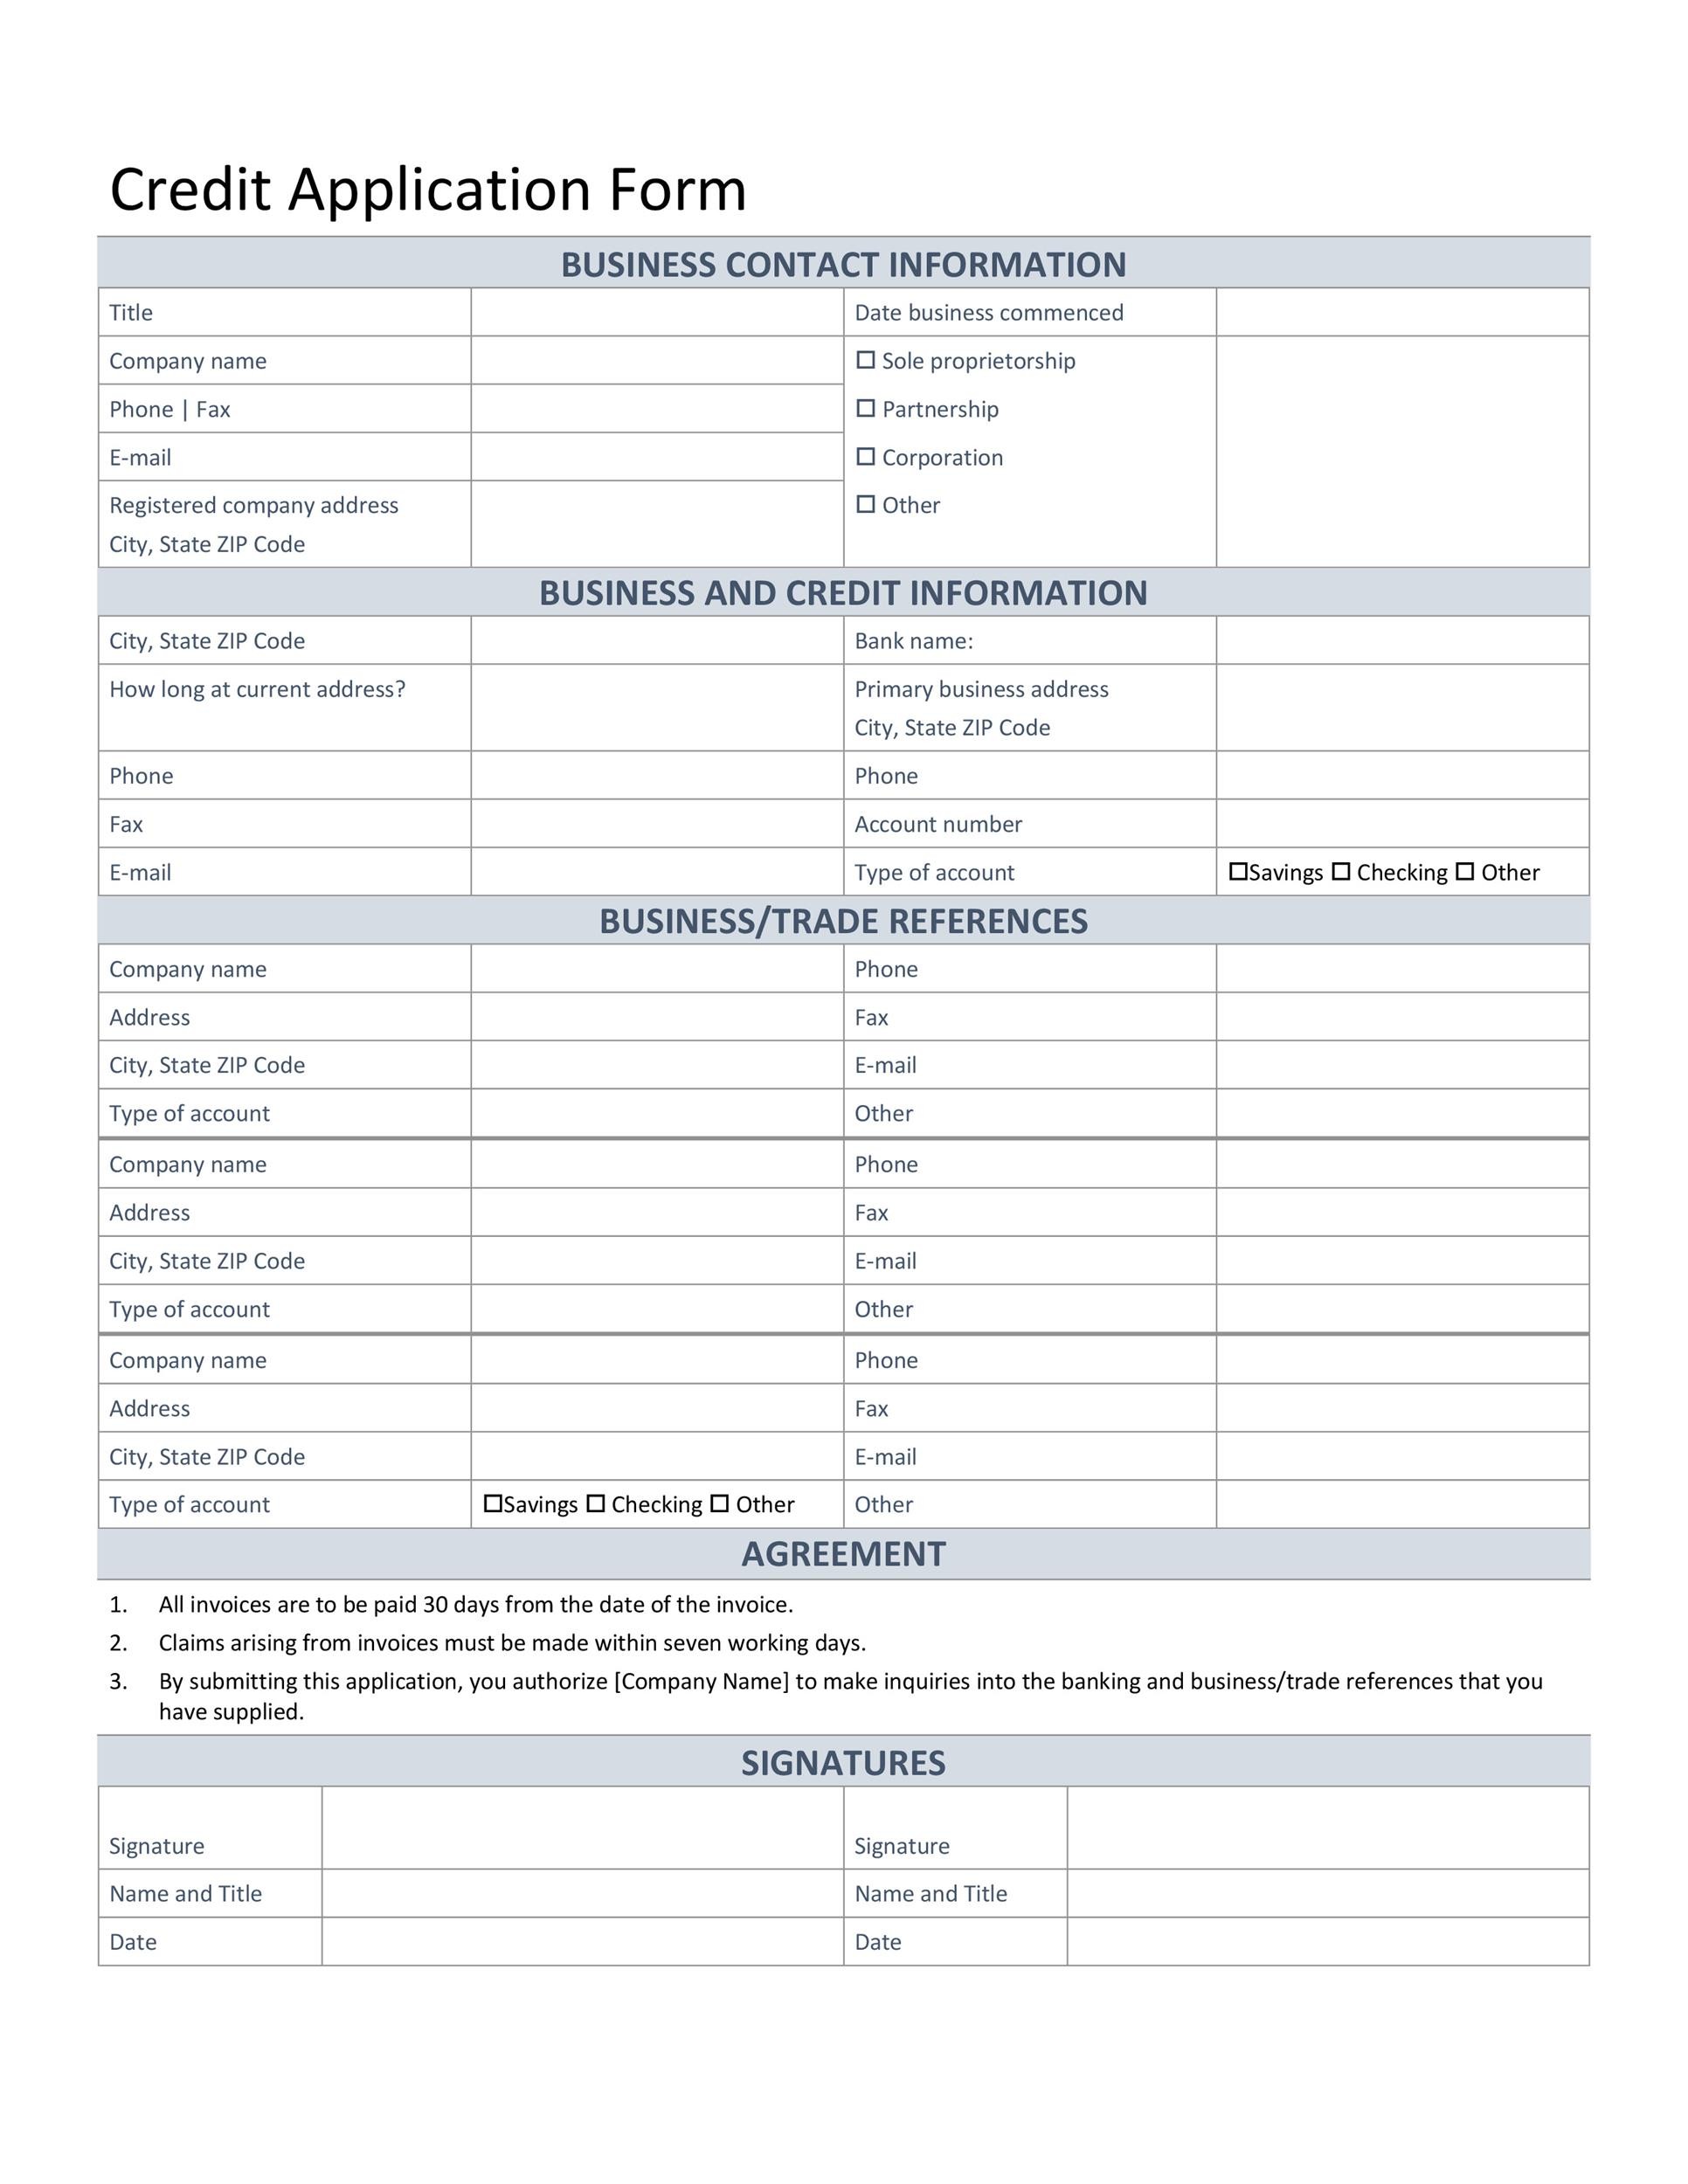 printable-credit-application-form